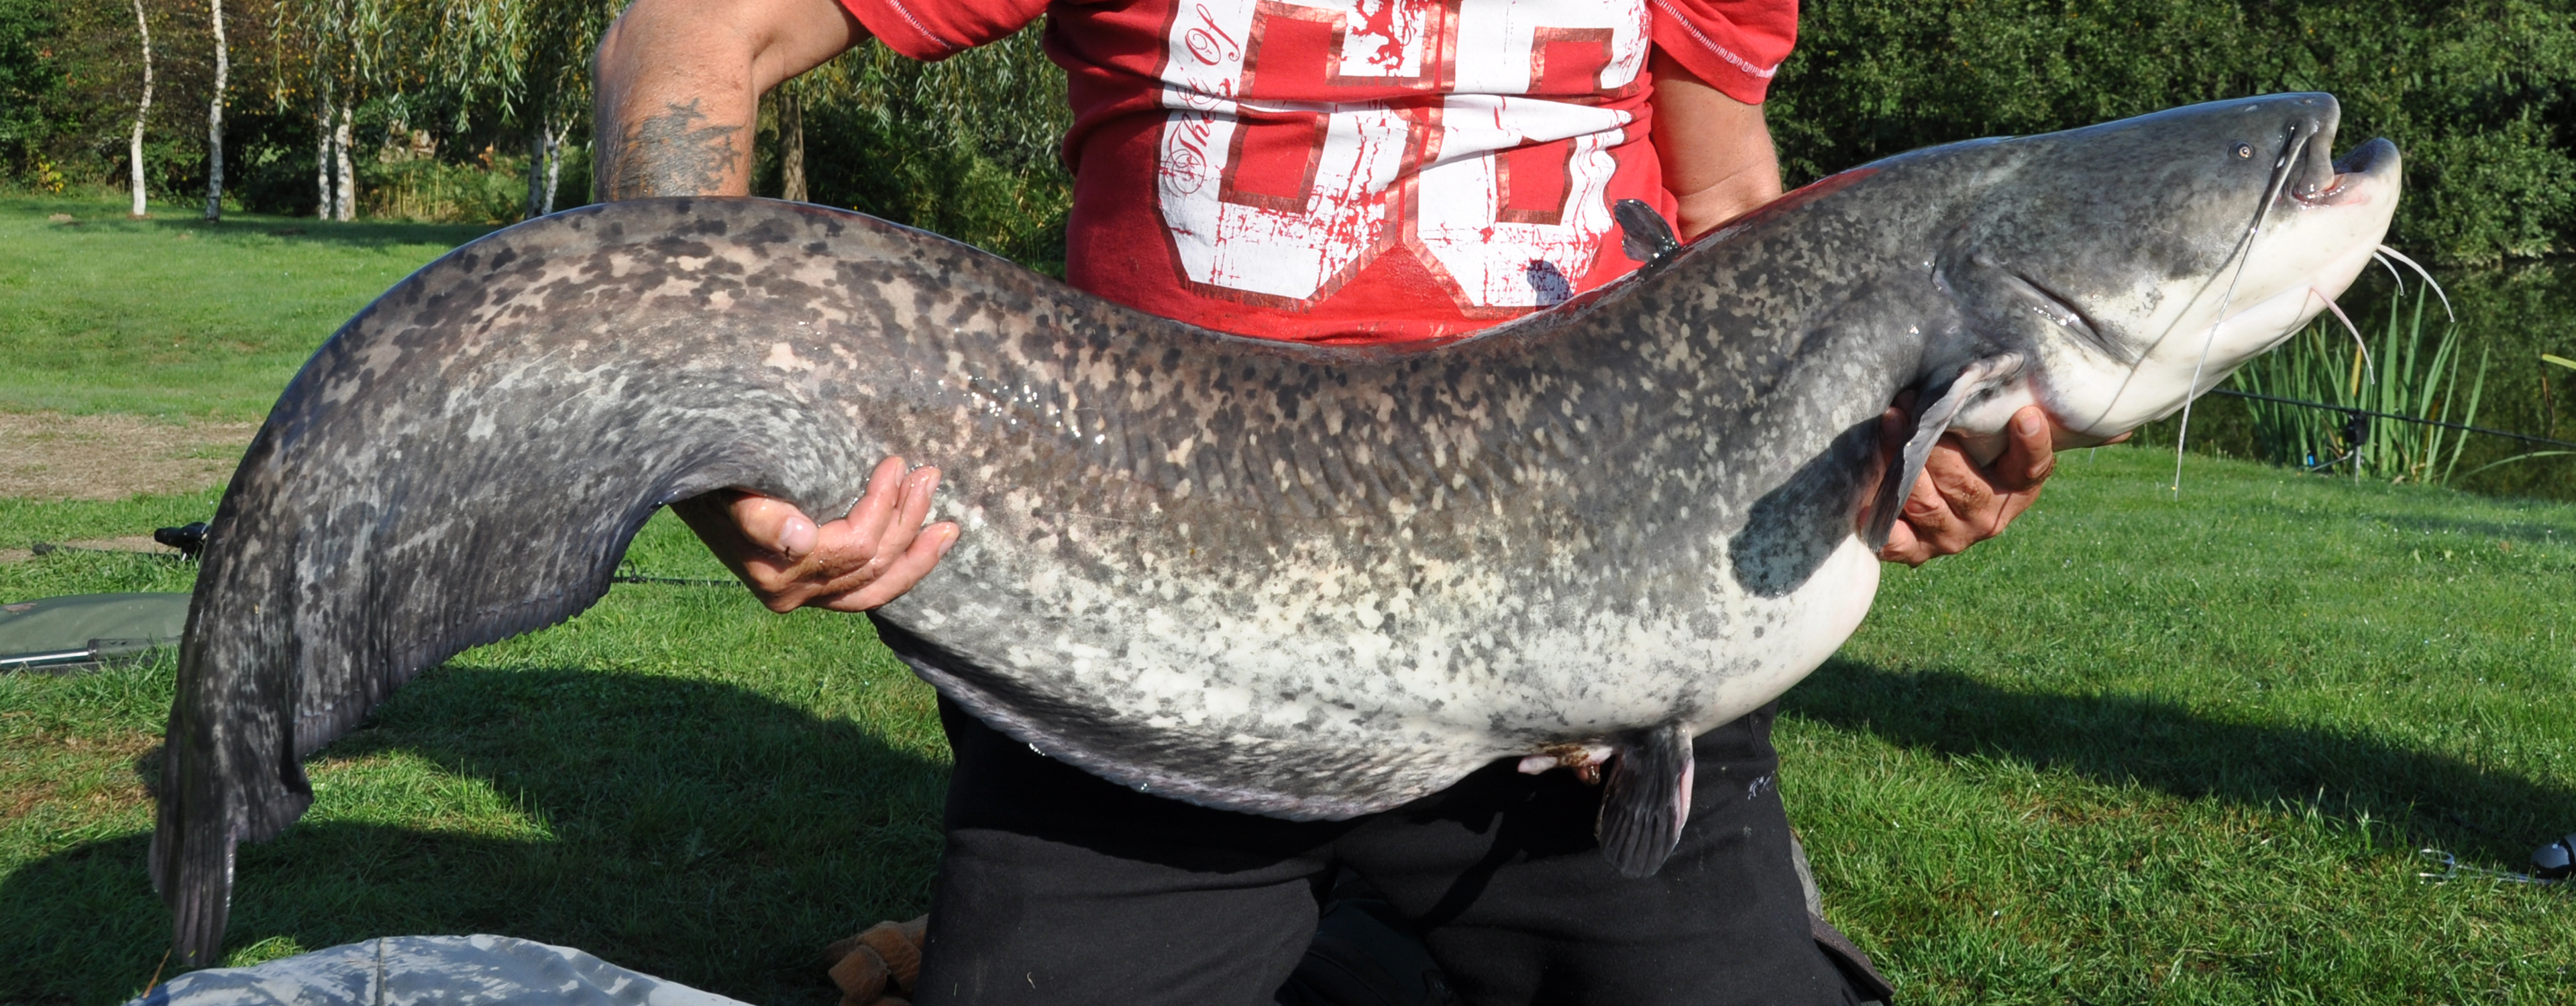 Large catfish caught at Etang de Azat-Chatenet fishing lake in France